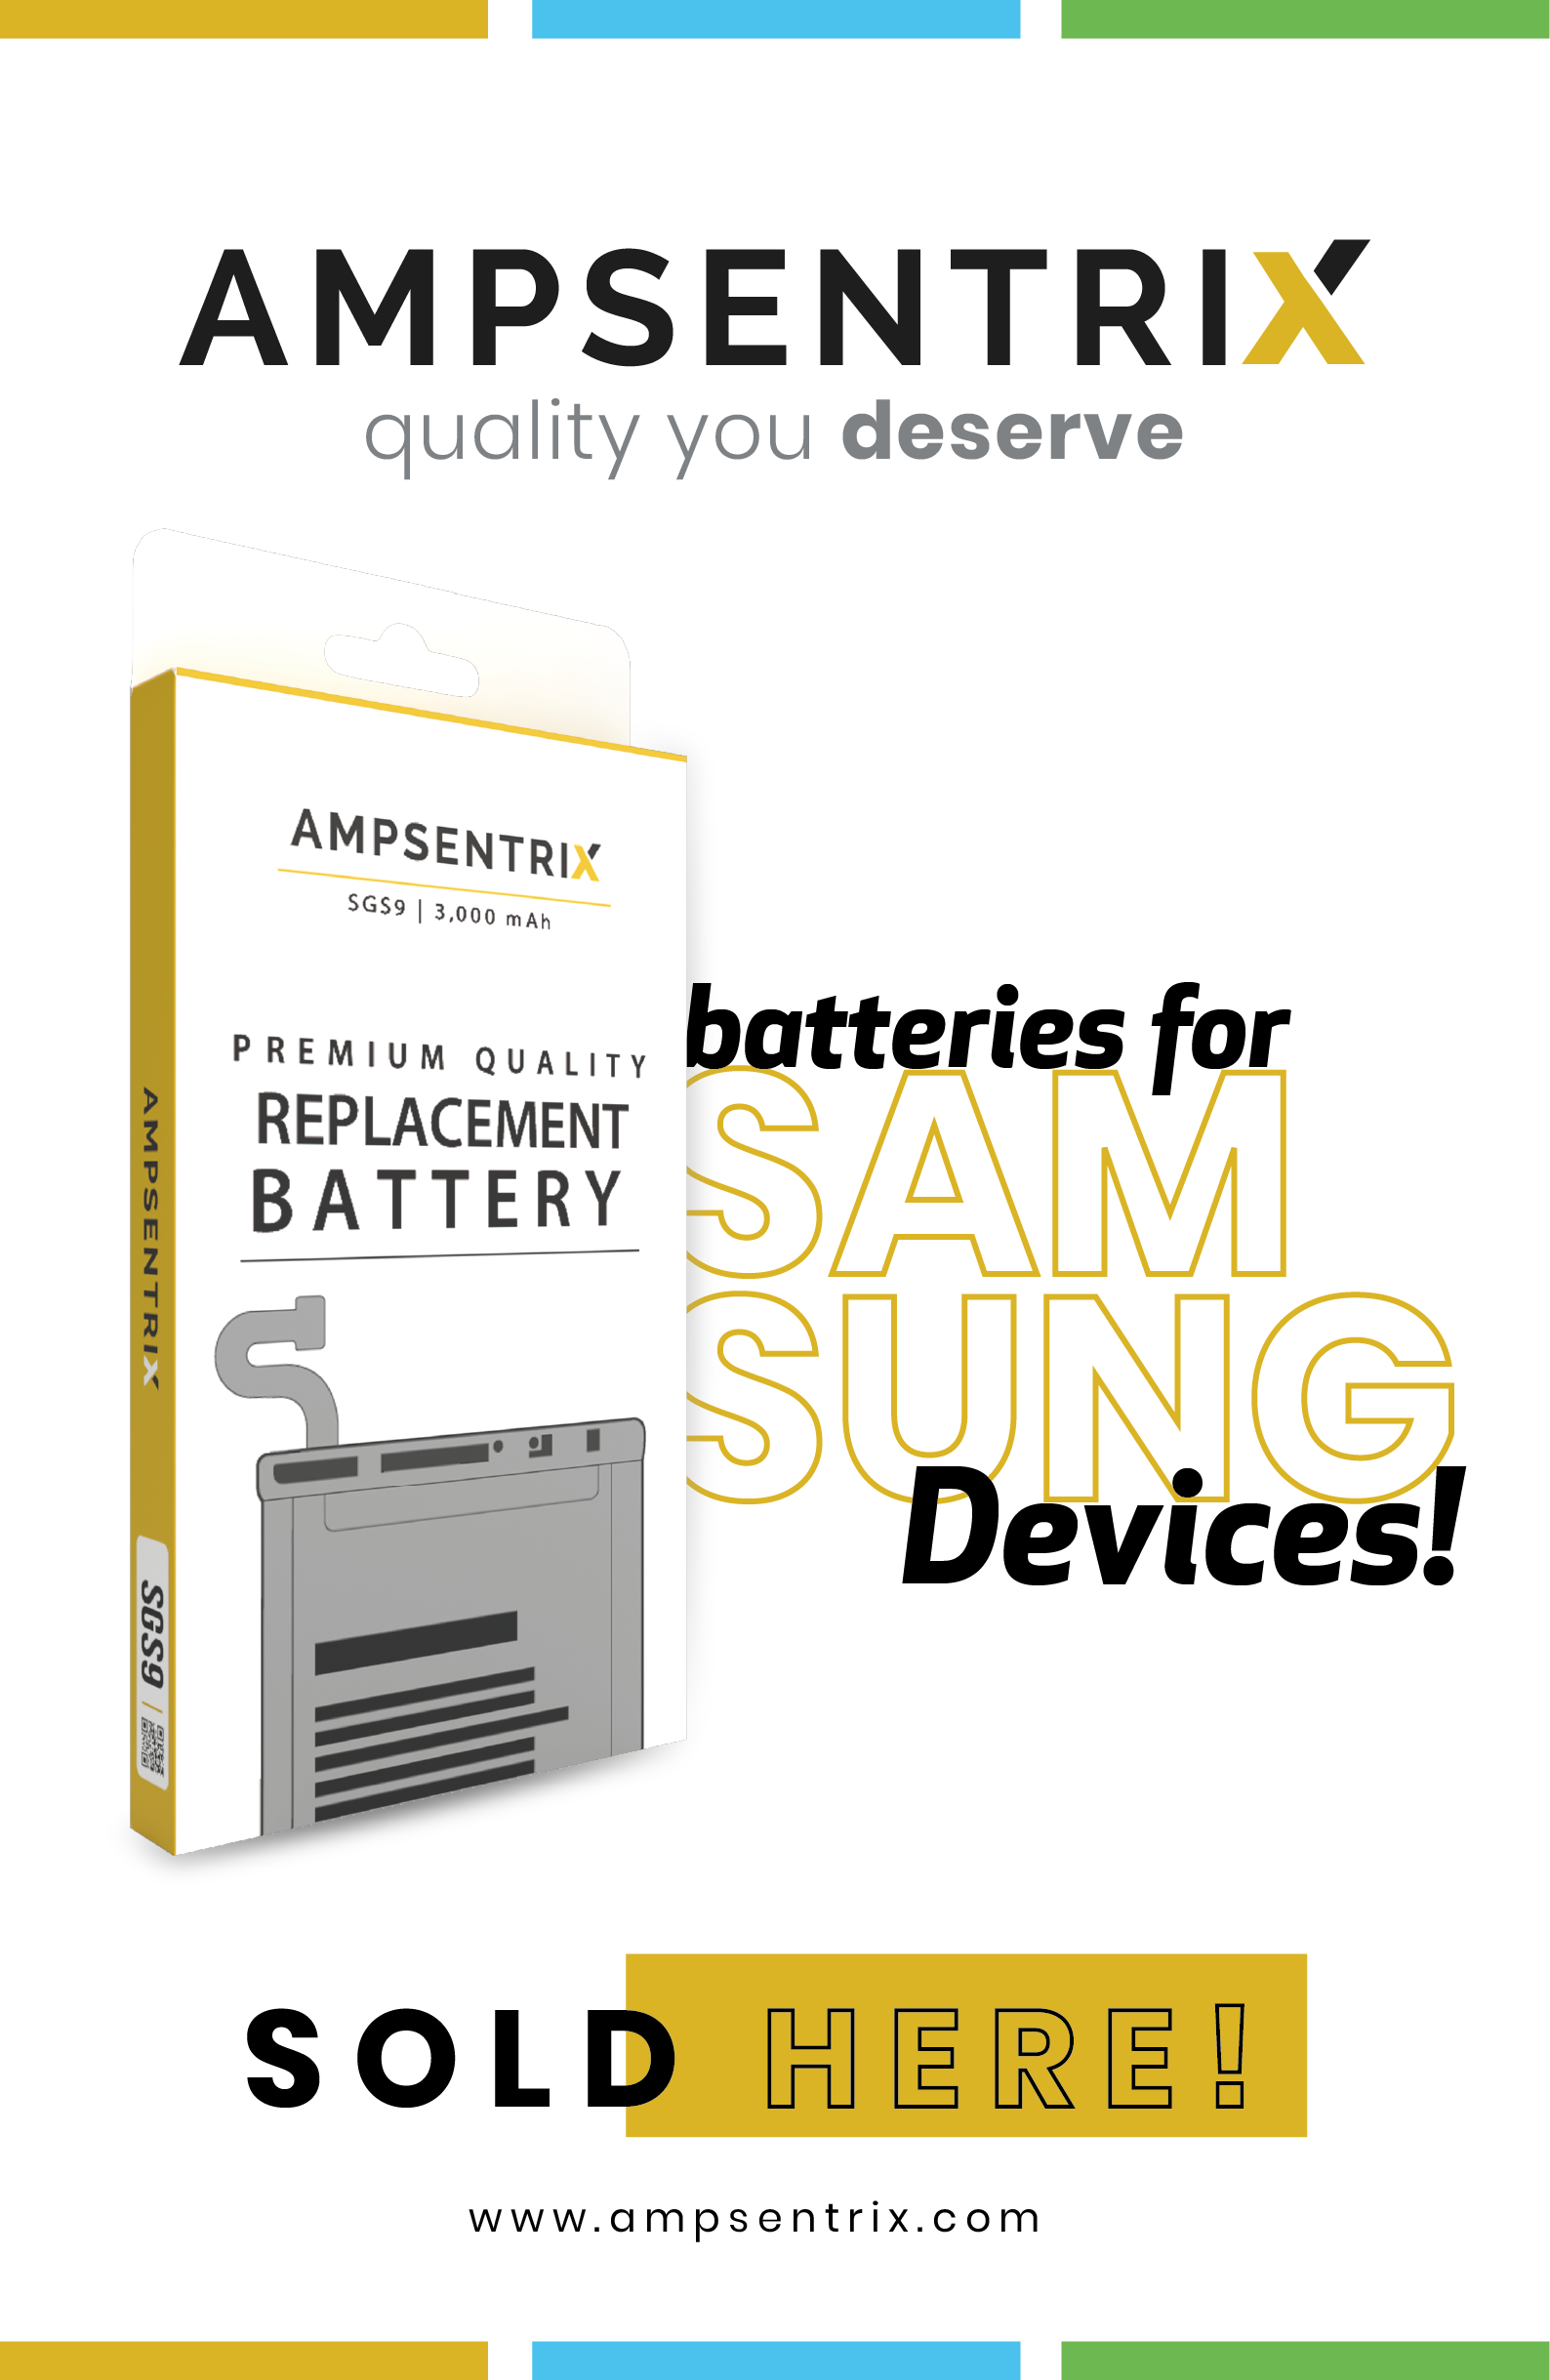 Ampsentrix Samsung Batteries